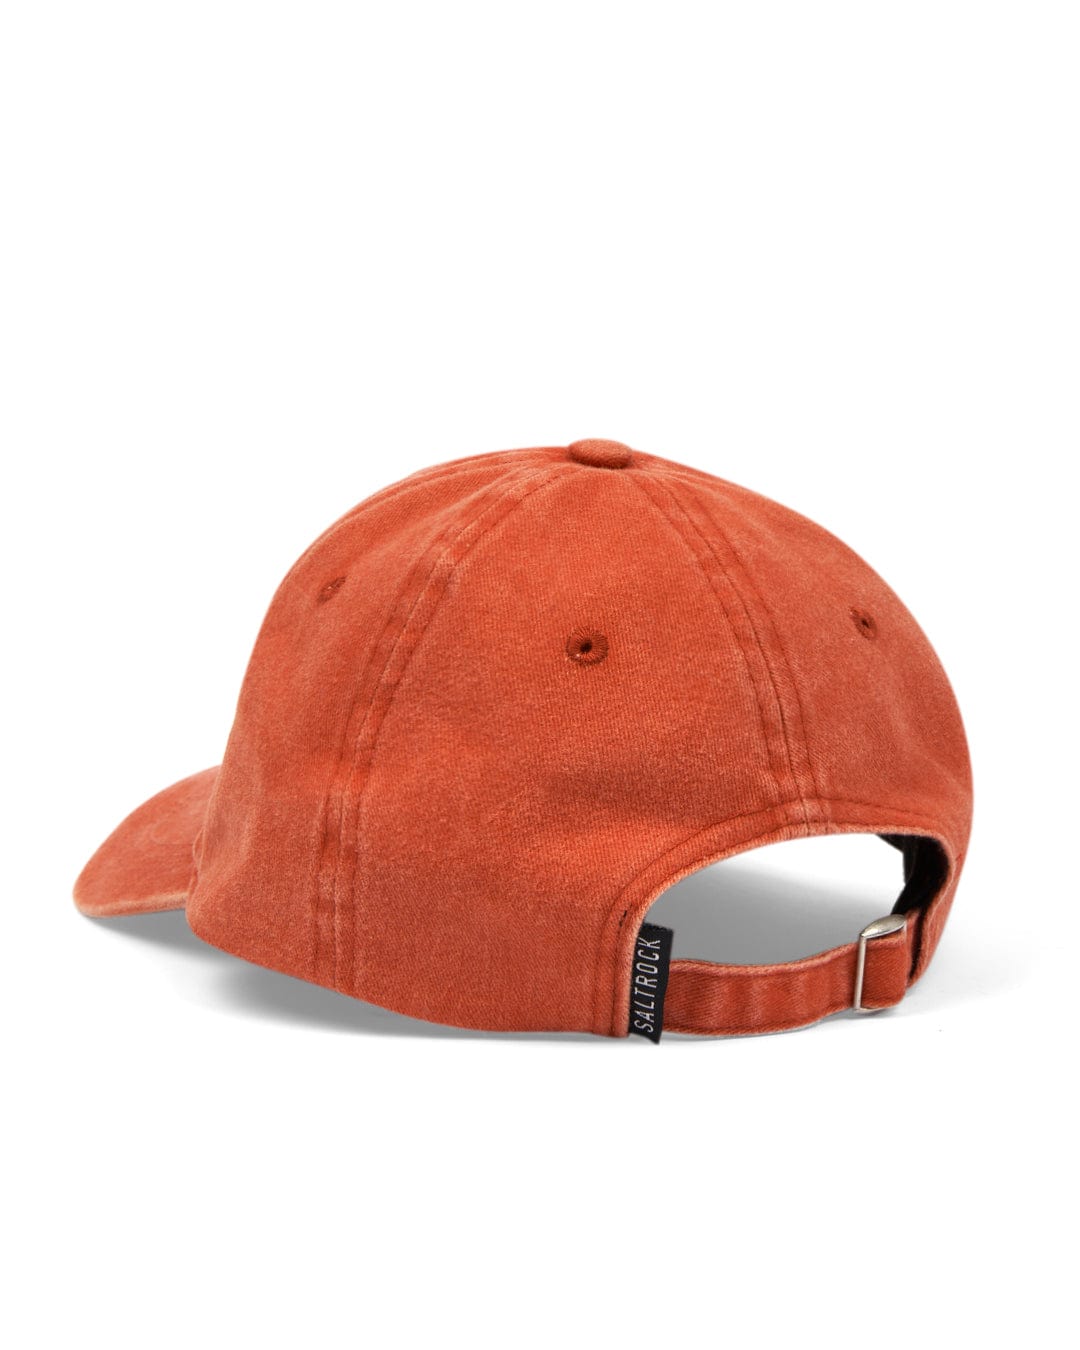 Sunburst Cap - Burnt Orange with Saltrock branding and adjustable strap against a white background.